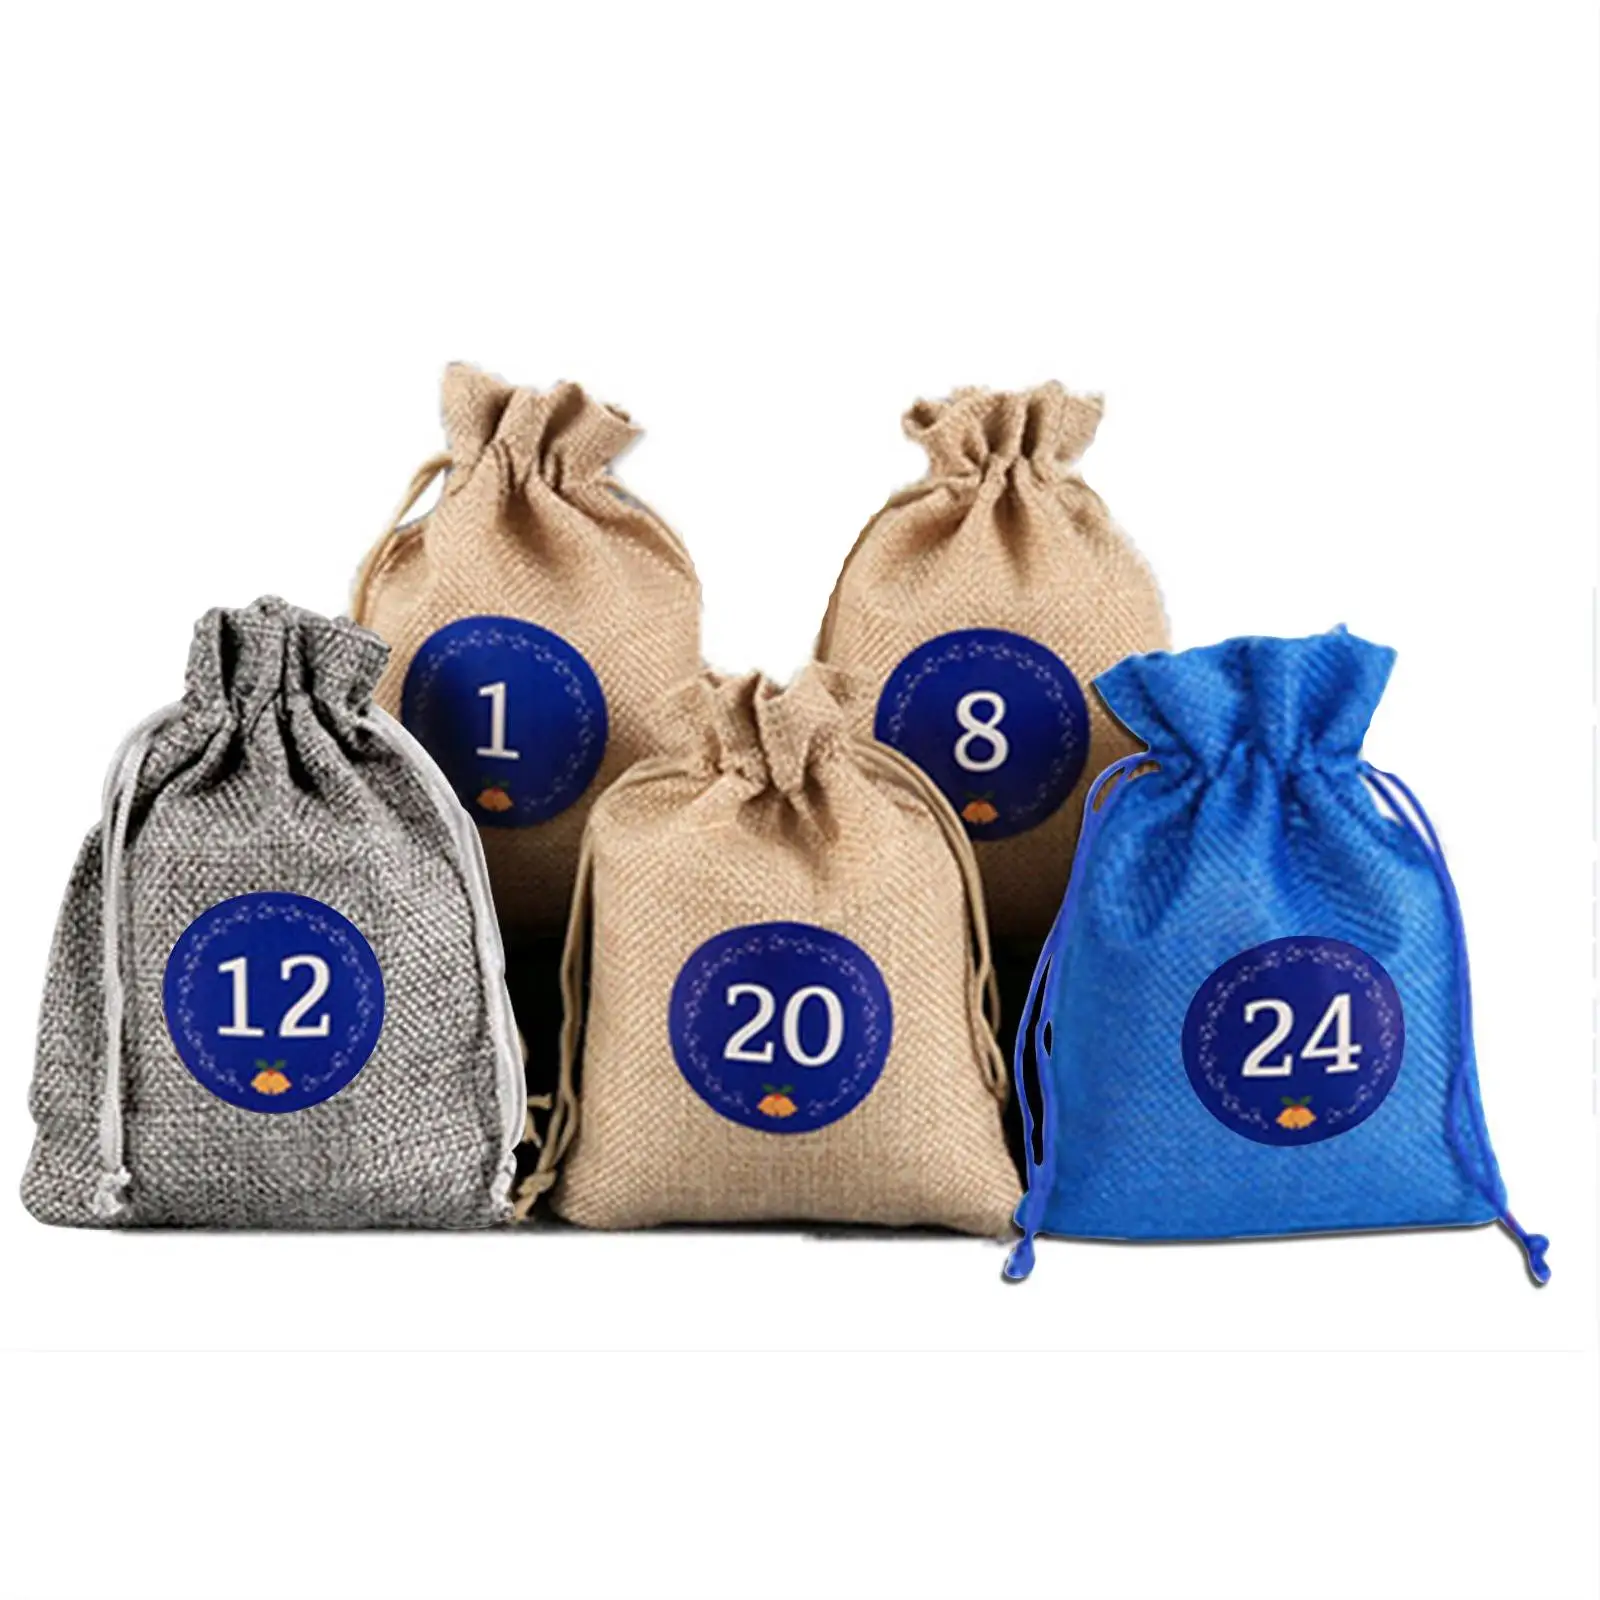 

24pcs/set Christmas Advent Calendar Bag Set Countdown 24 Days Burlap Bag Gift Drawstring Bag DIY Home Decorations with Clip